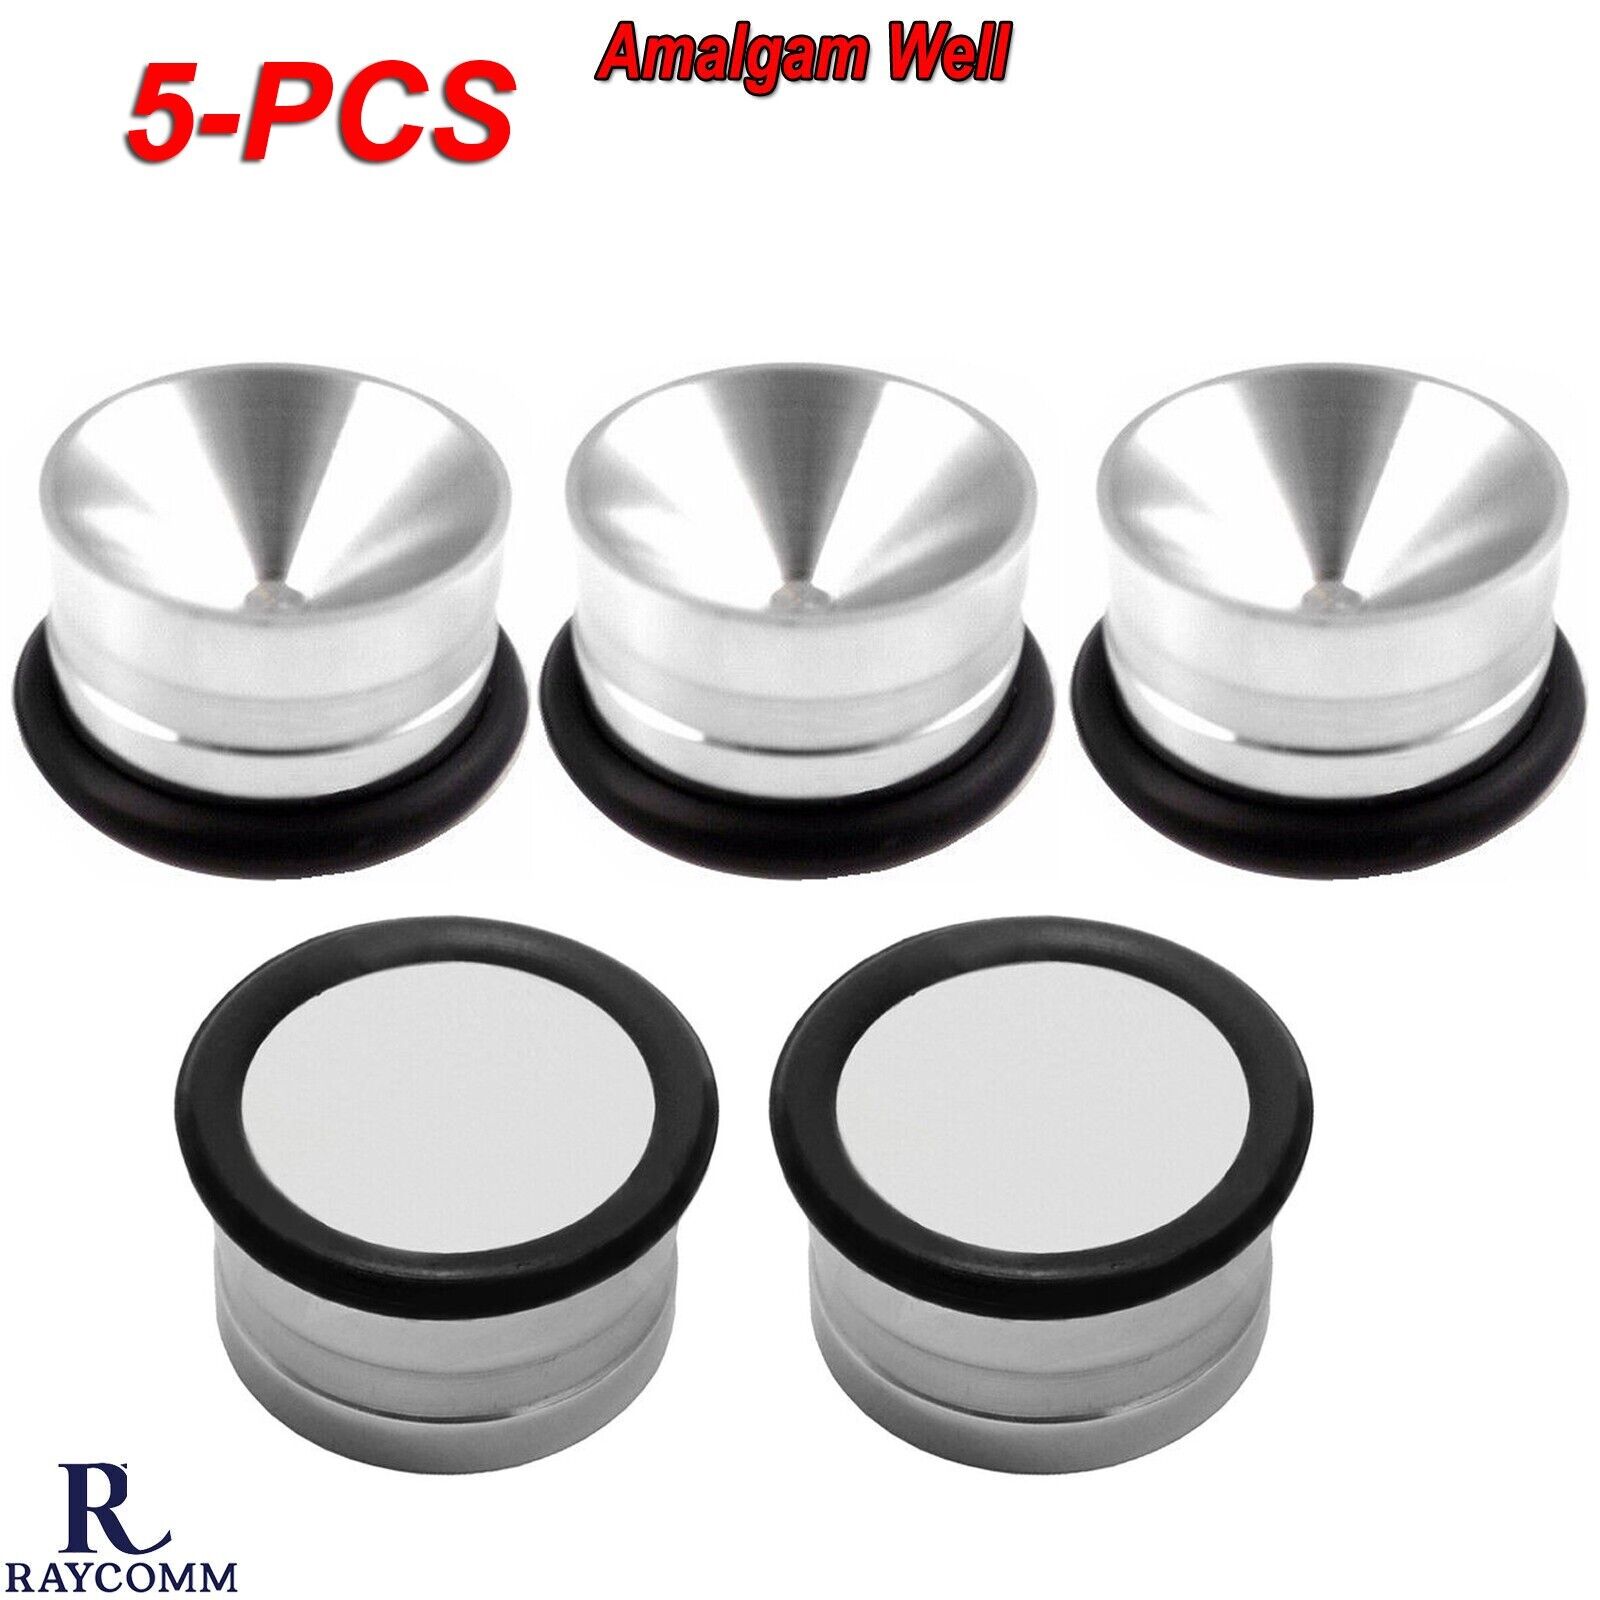 5 PCS Dental Amalgam Well Instrument Restorative Amalgam Carrier Pot Mixing Tool